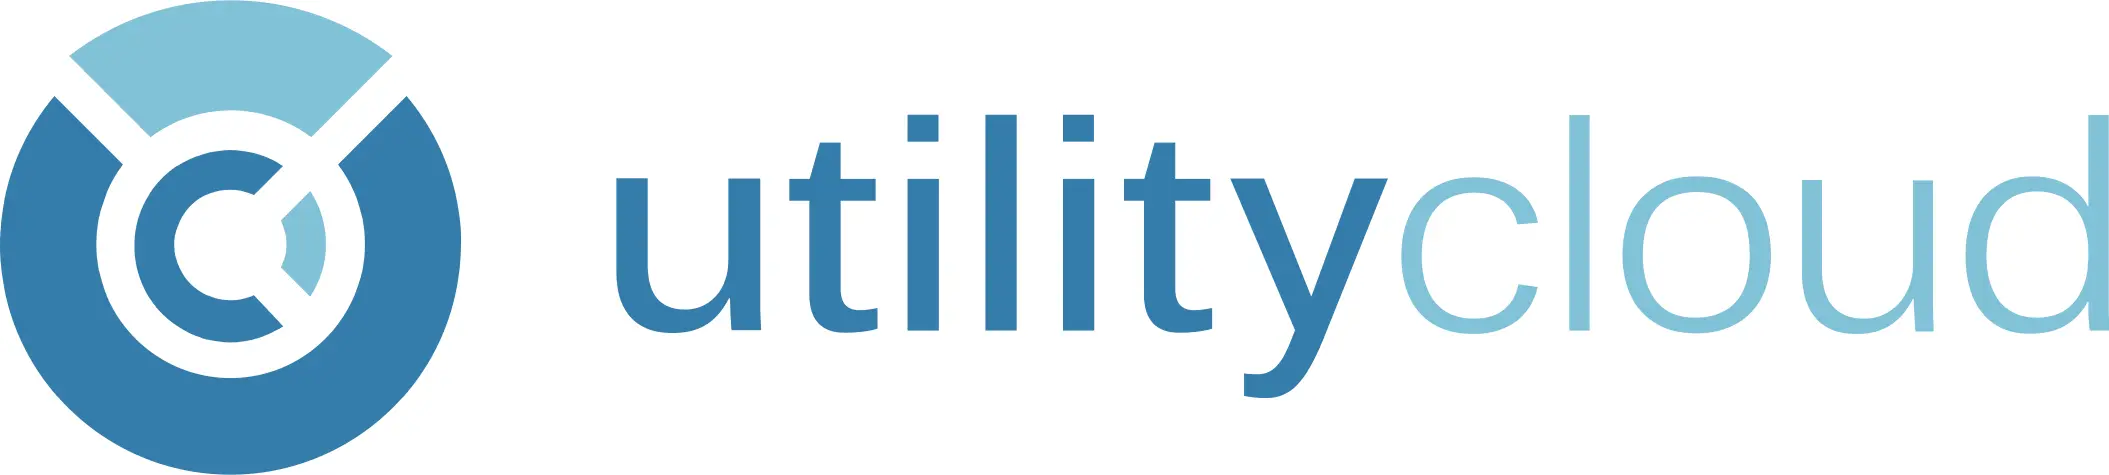 Utility Cloud _ Utility Asset Management Software-01